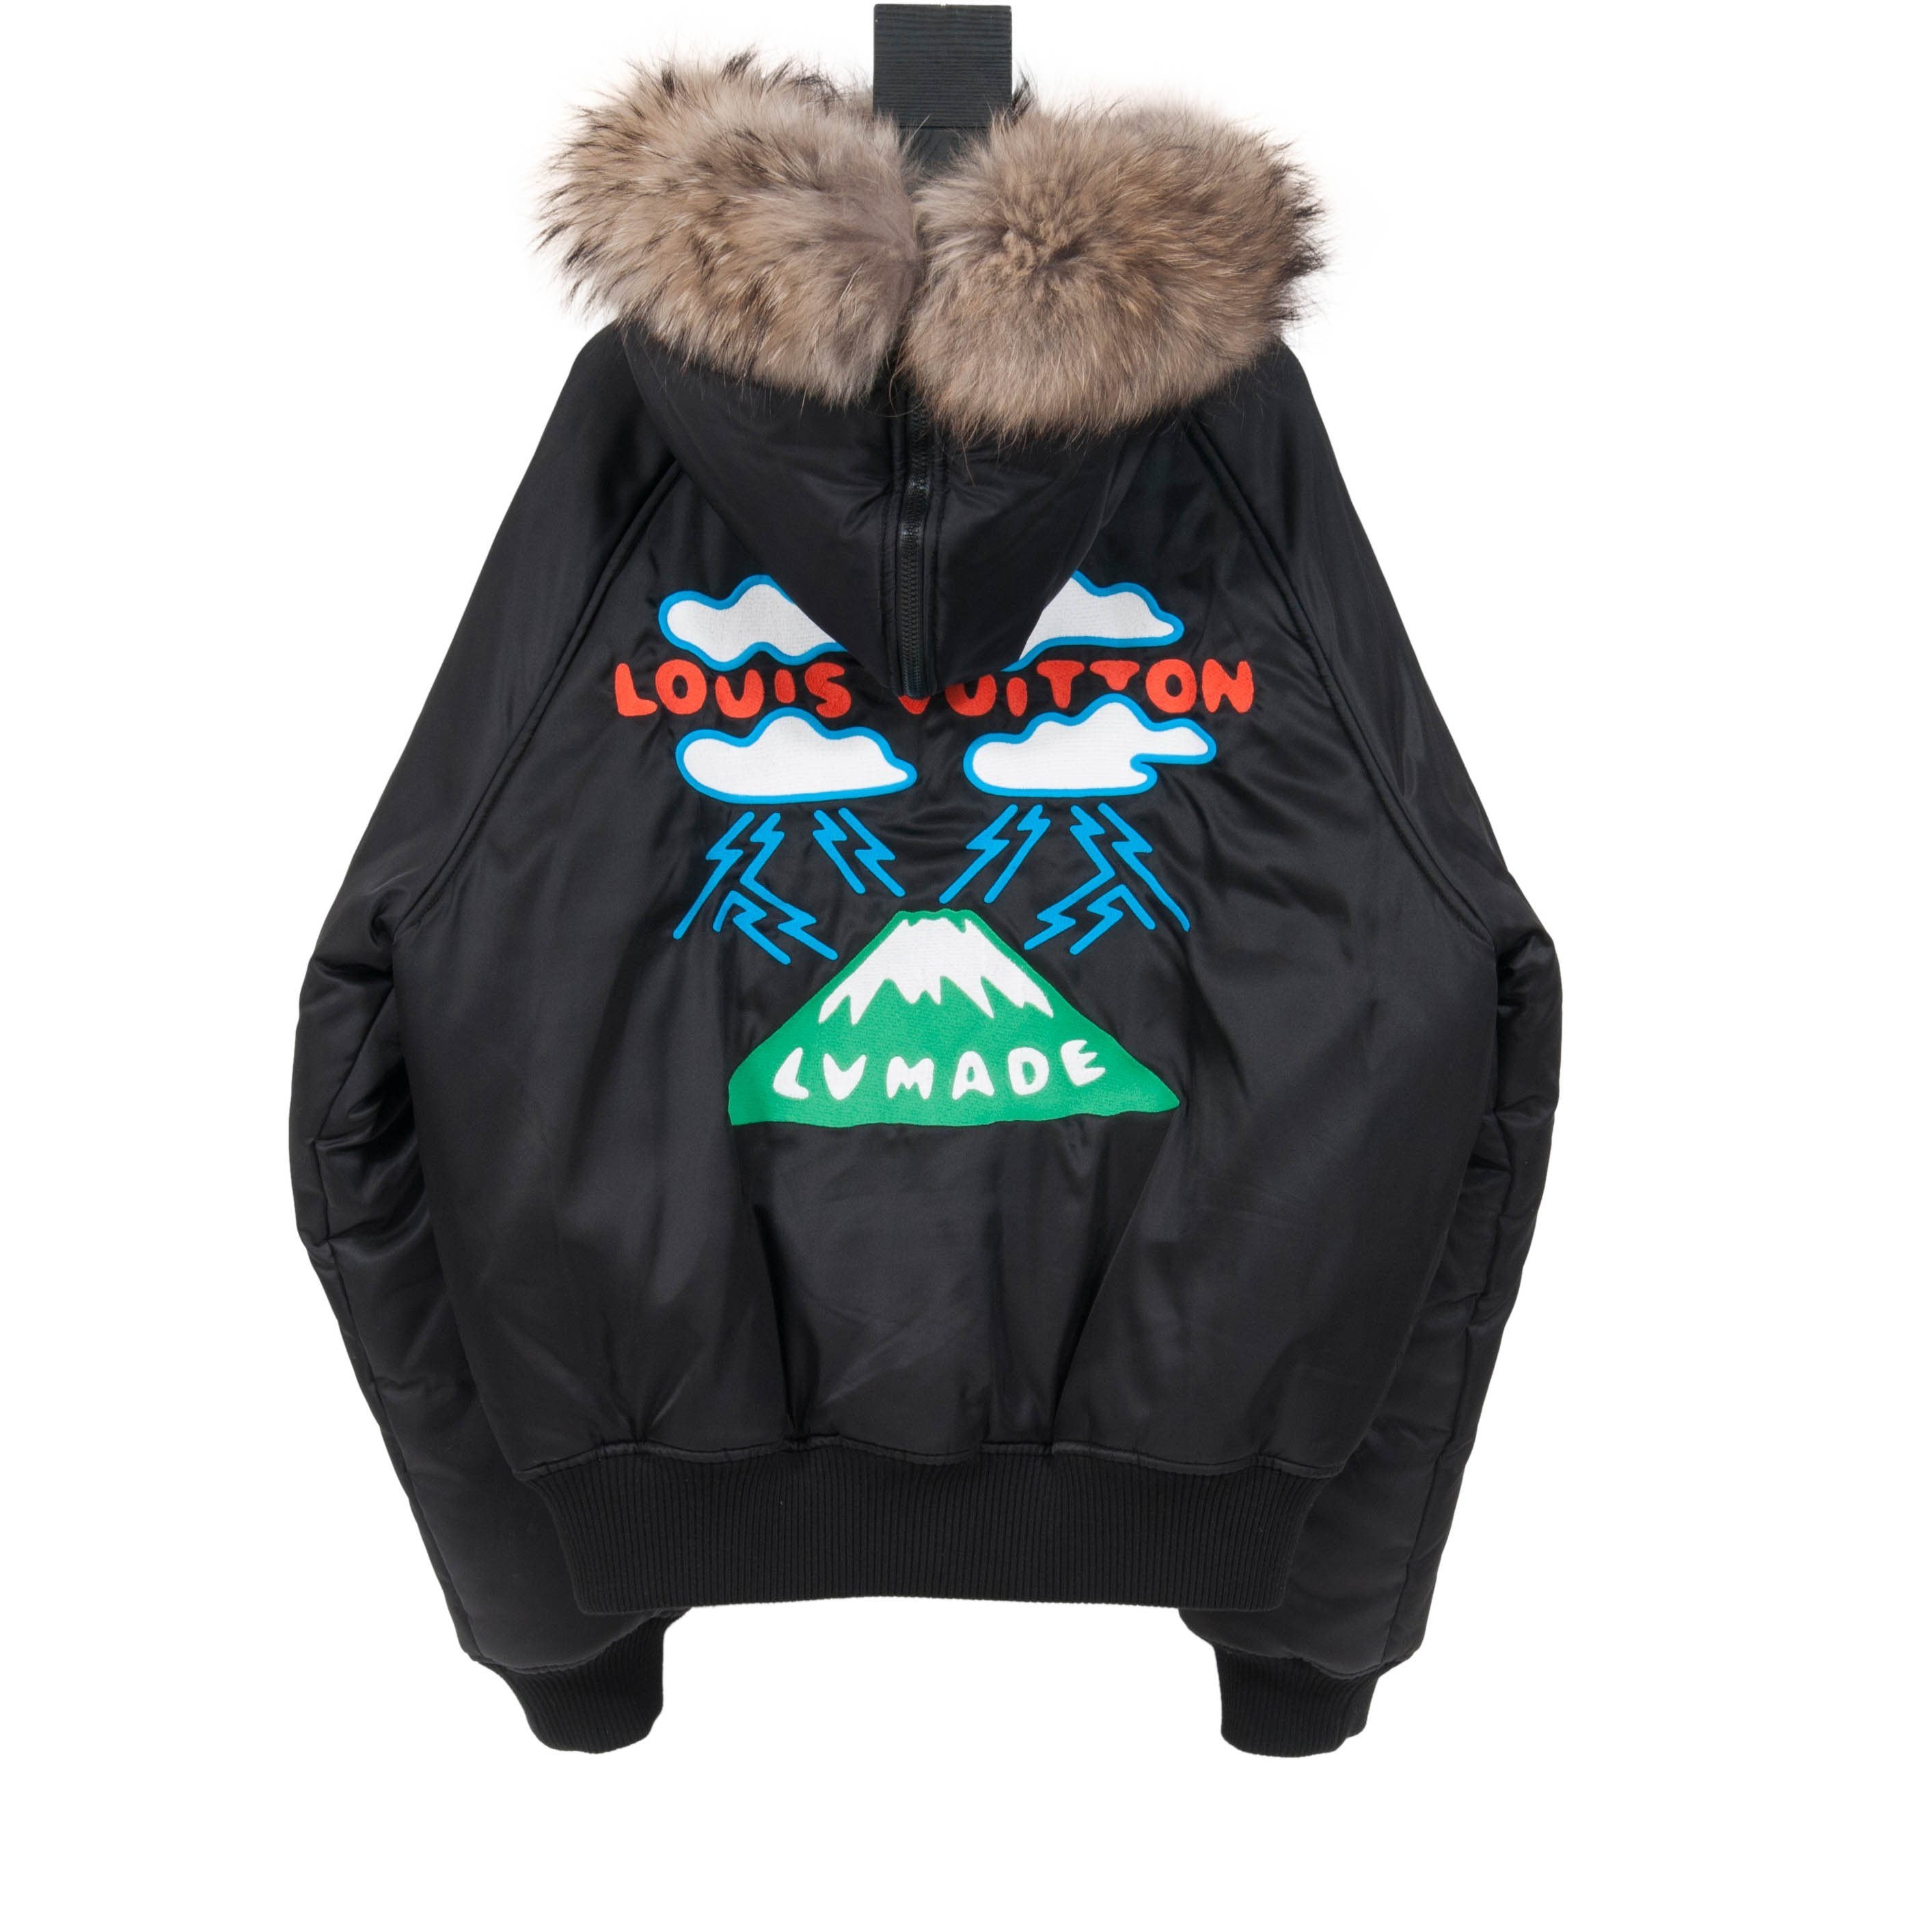 Louis Vuitton Animal Printed Jacket for Sale in Leesburg, FL - OfferUp